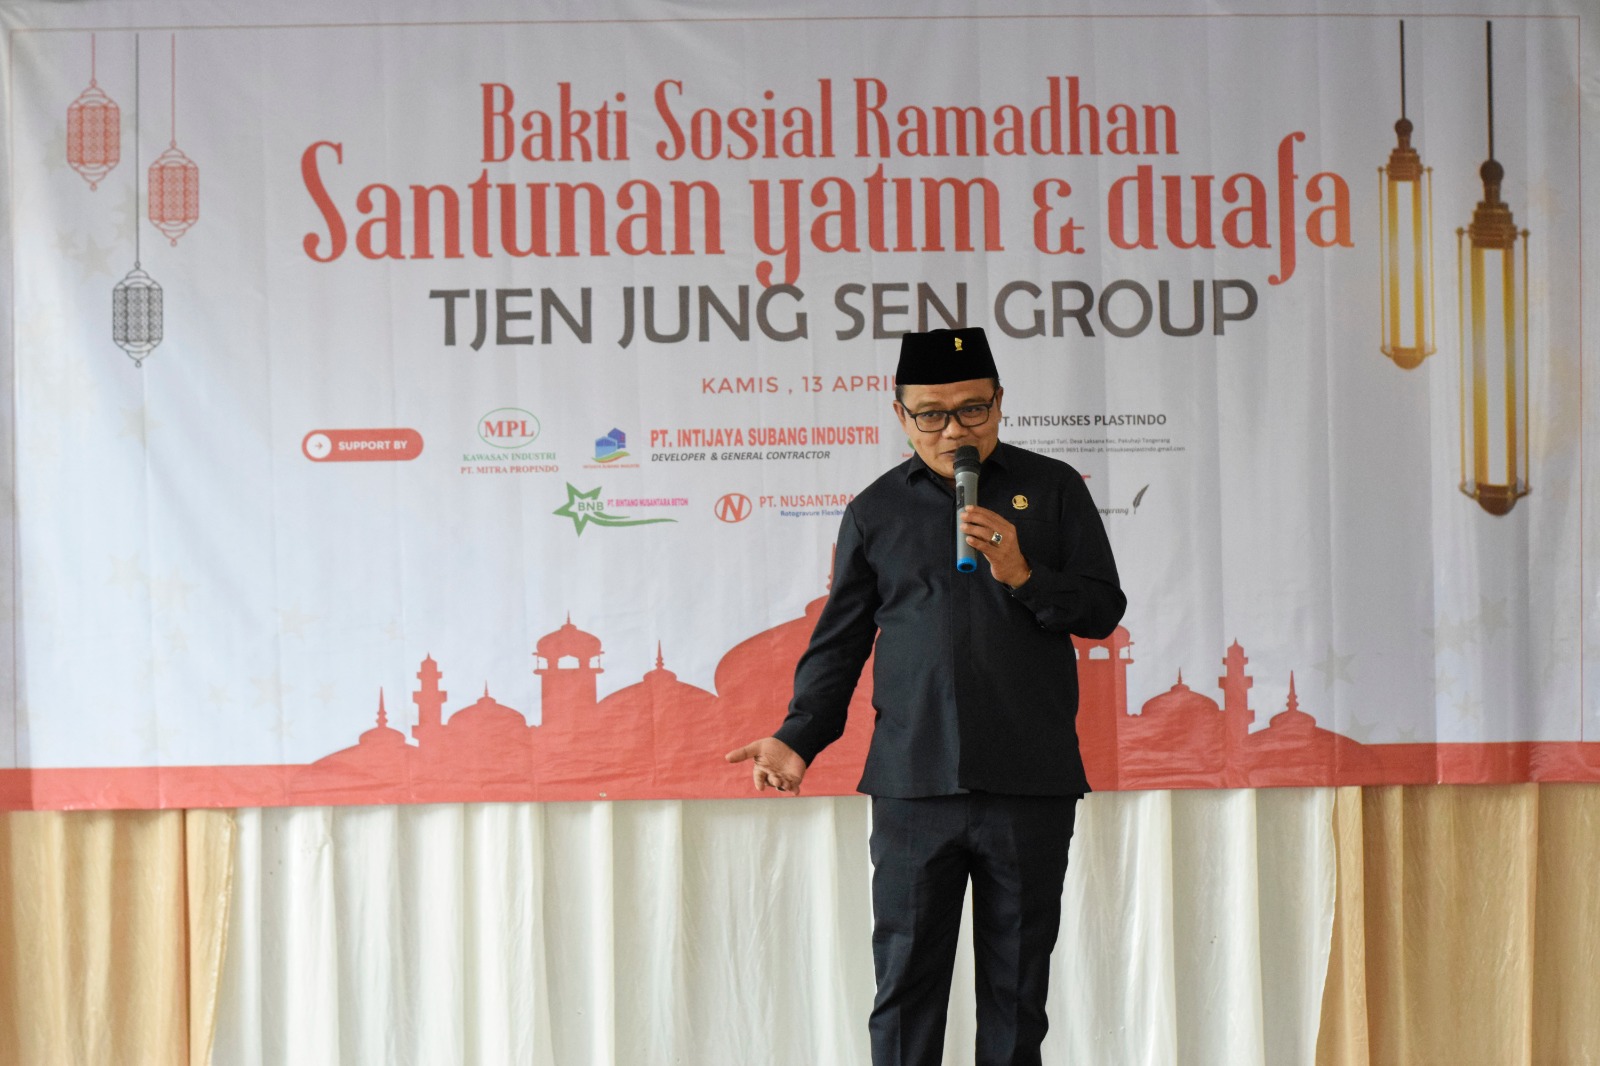 Ketua DPRD ungkap Sosok Tjen Jung Sen, Pelaku Sejarah Kemajuan Pakuhaji Tangerang, Siapa Dia?